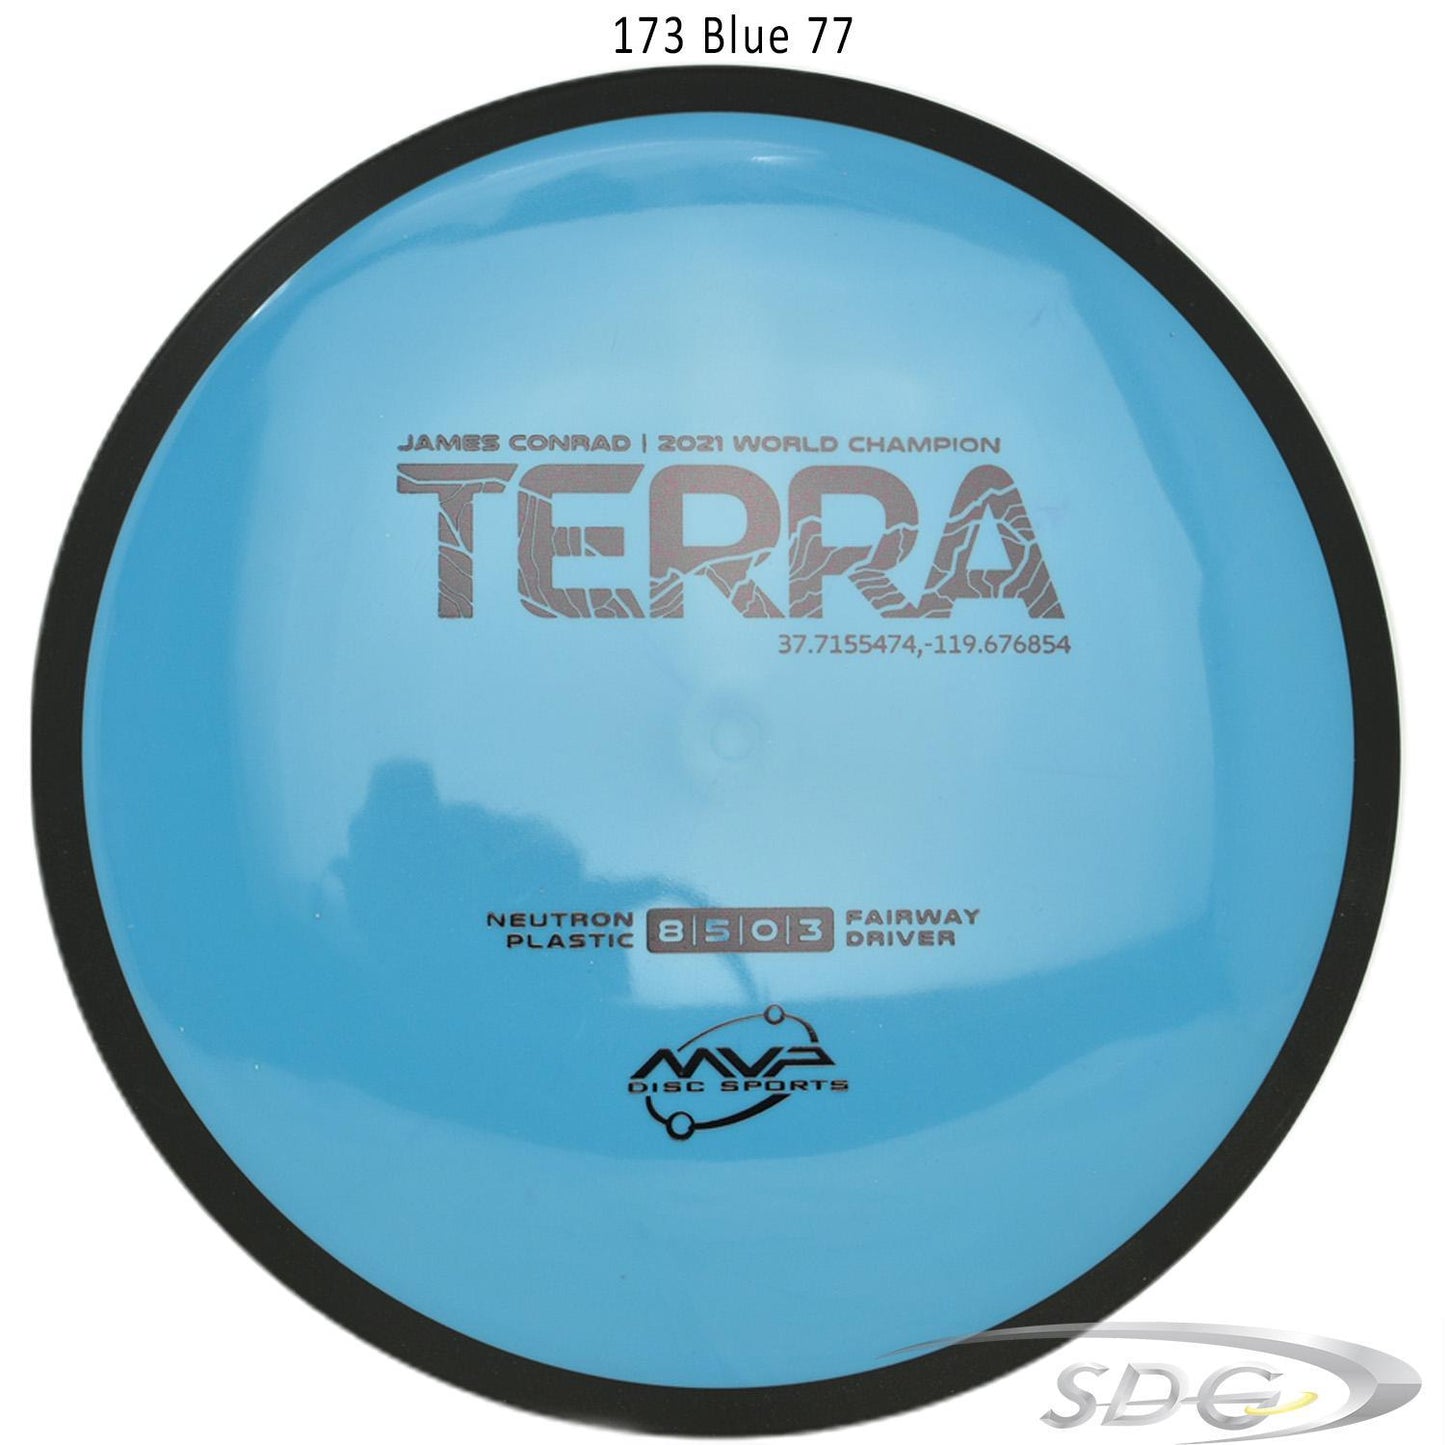 mvp-neutron-terra-2022-james-conrad-disc-golf-fairway-driver 173 Blue 77 